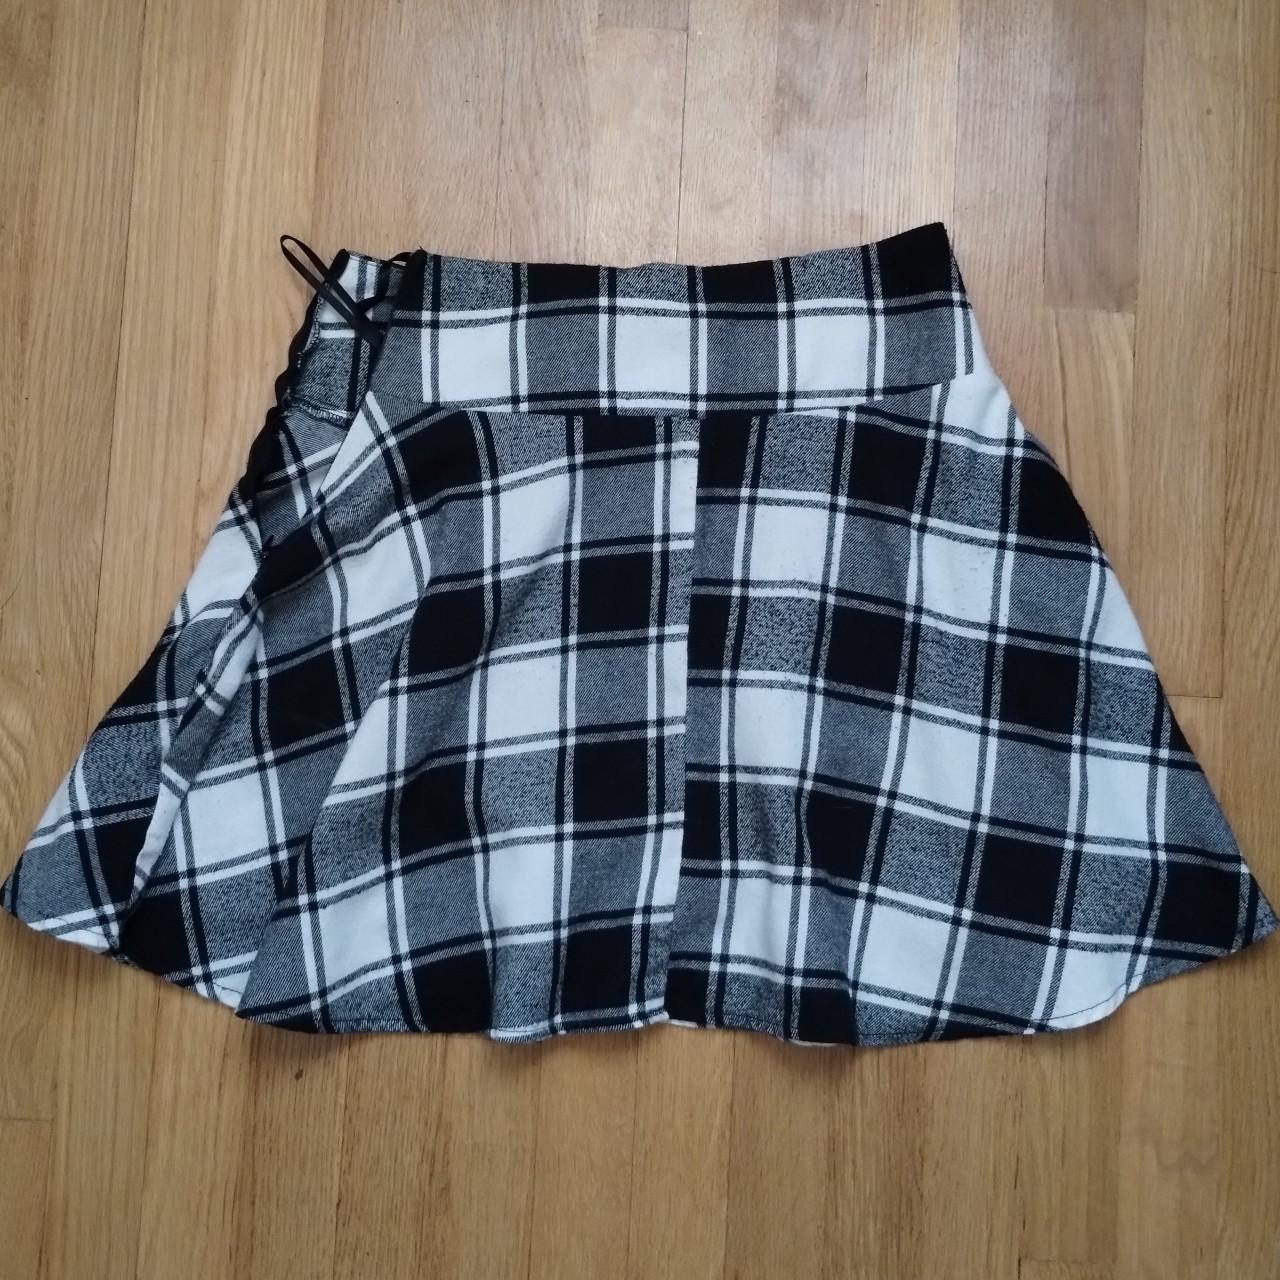 Black and white plaid skirt. - X Small size - waist:... - Depop